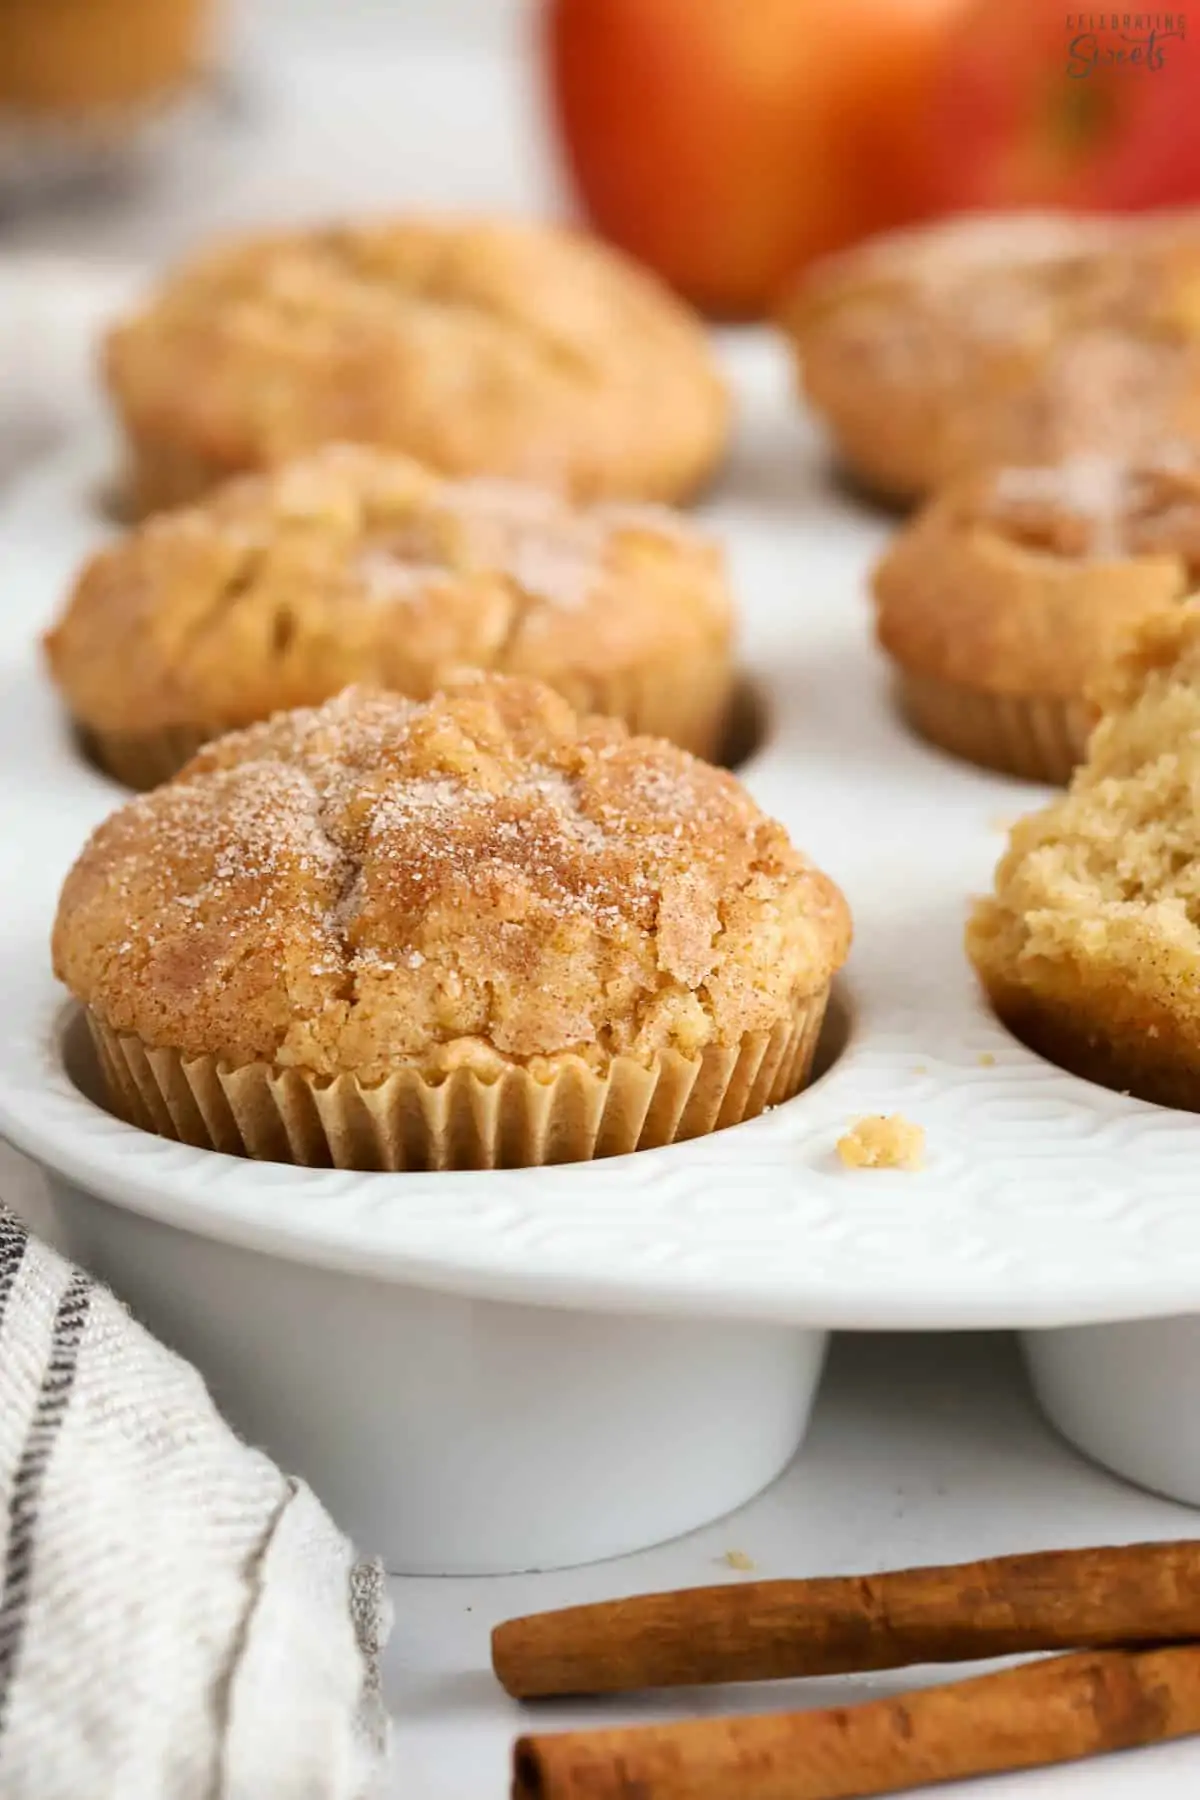 Apple cinnamon muffins in a white muffin baking dish.